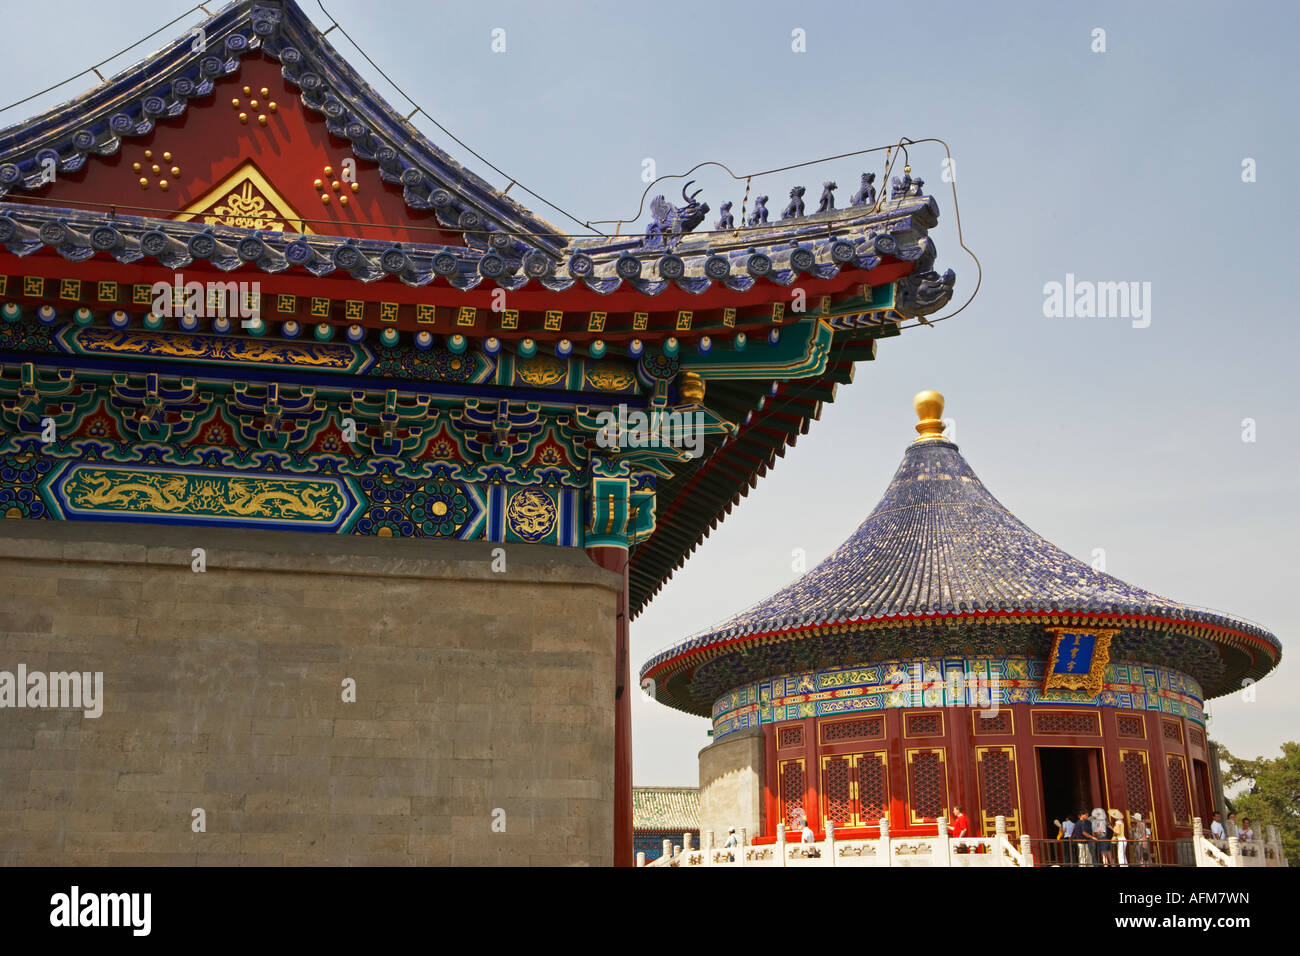 Imperial vault of heaven, Temple of heaven Park (Tiantan Gongyuan), Beijing, China. Stock Photo